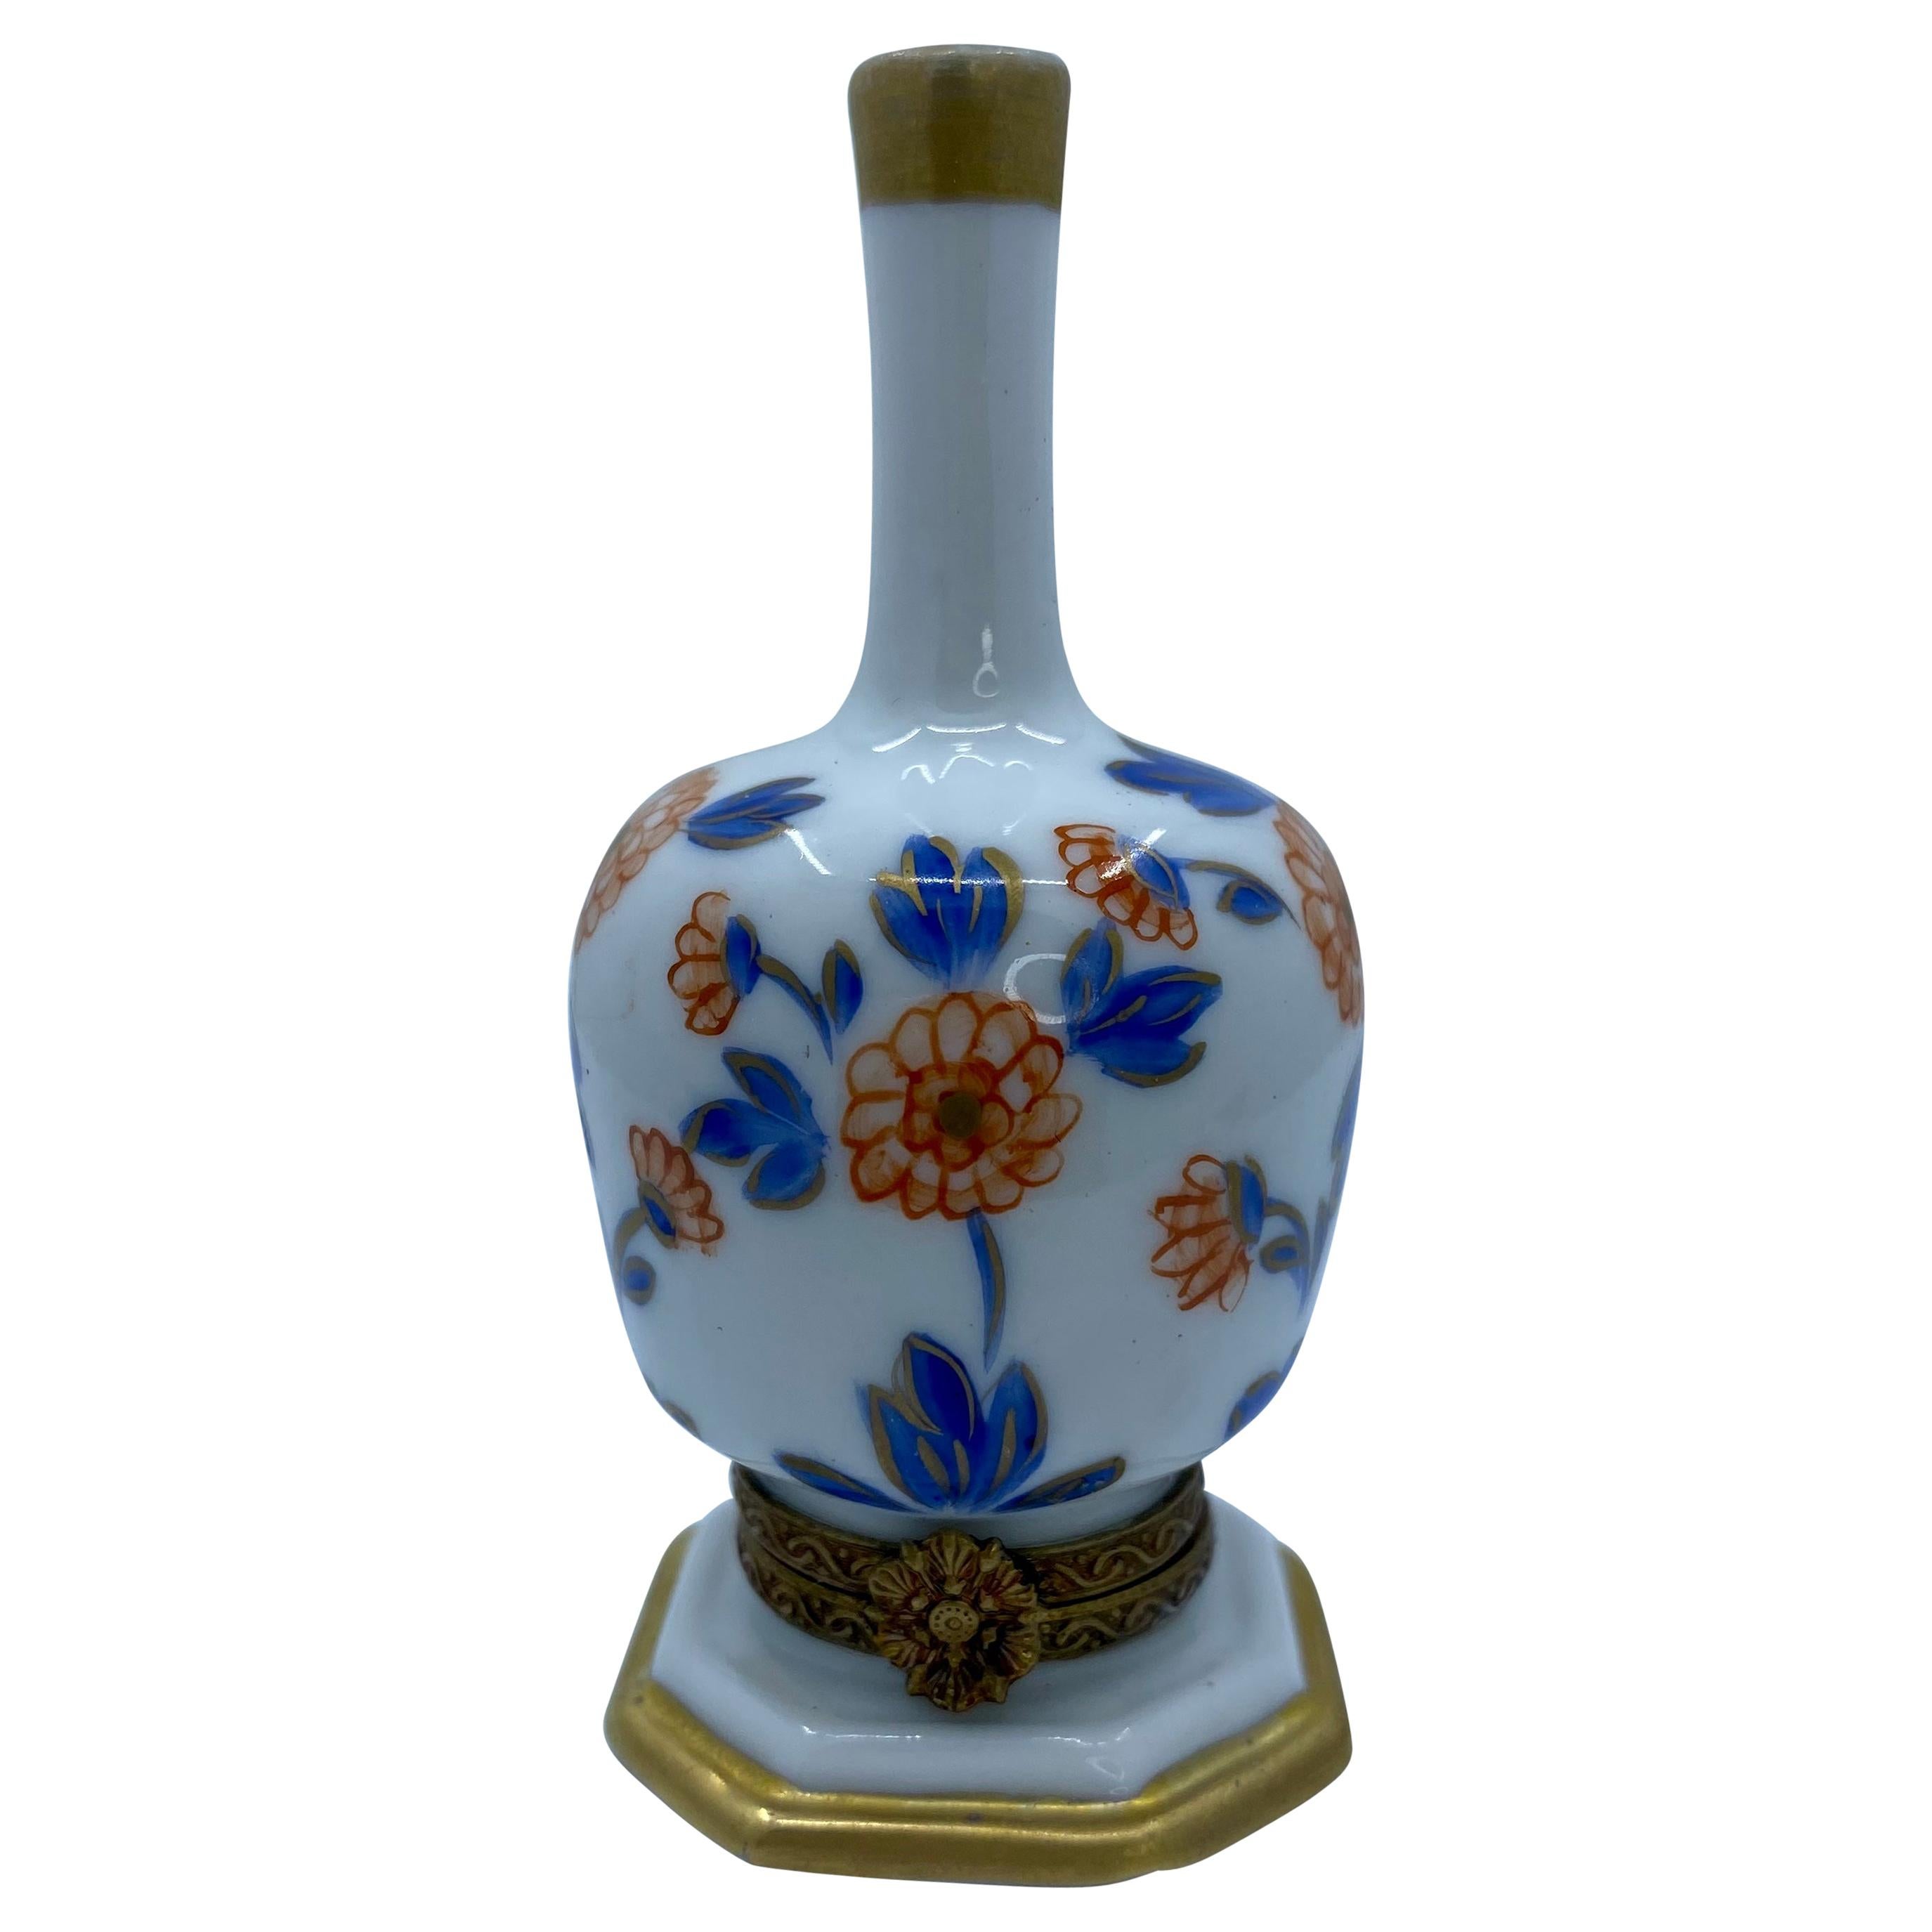 Unique Limoges France Hand Painted Porcelain Vase Trinket Box with Floral Motif For Sale